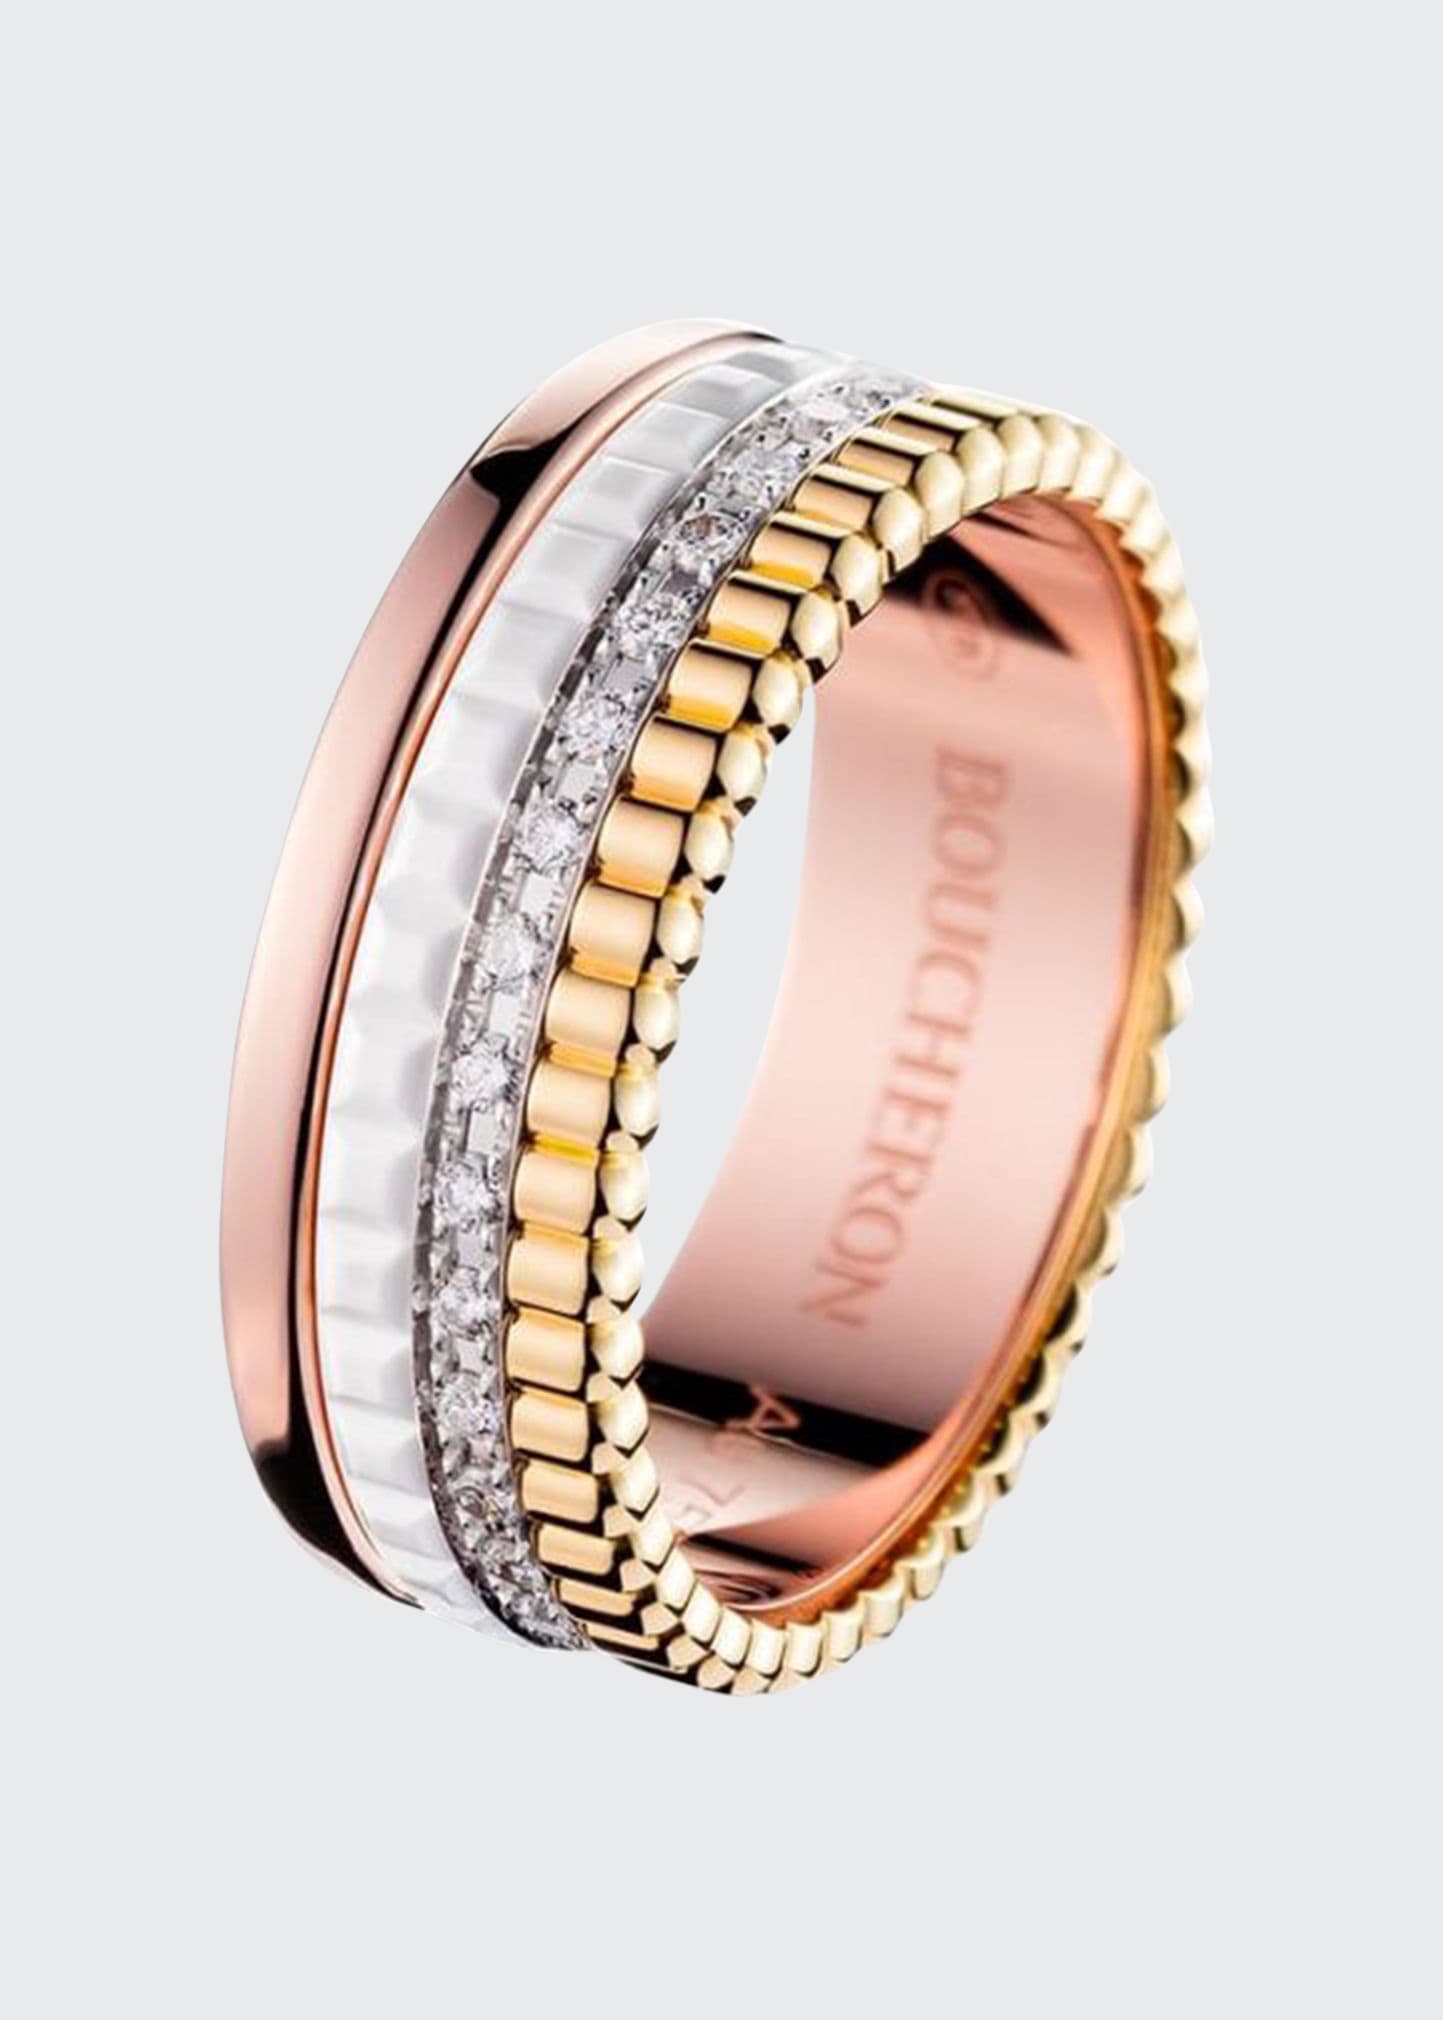 Boucheron Quatre Small Ring in Tricolor Gold with White Ceramic and Diamonds